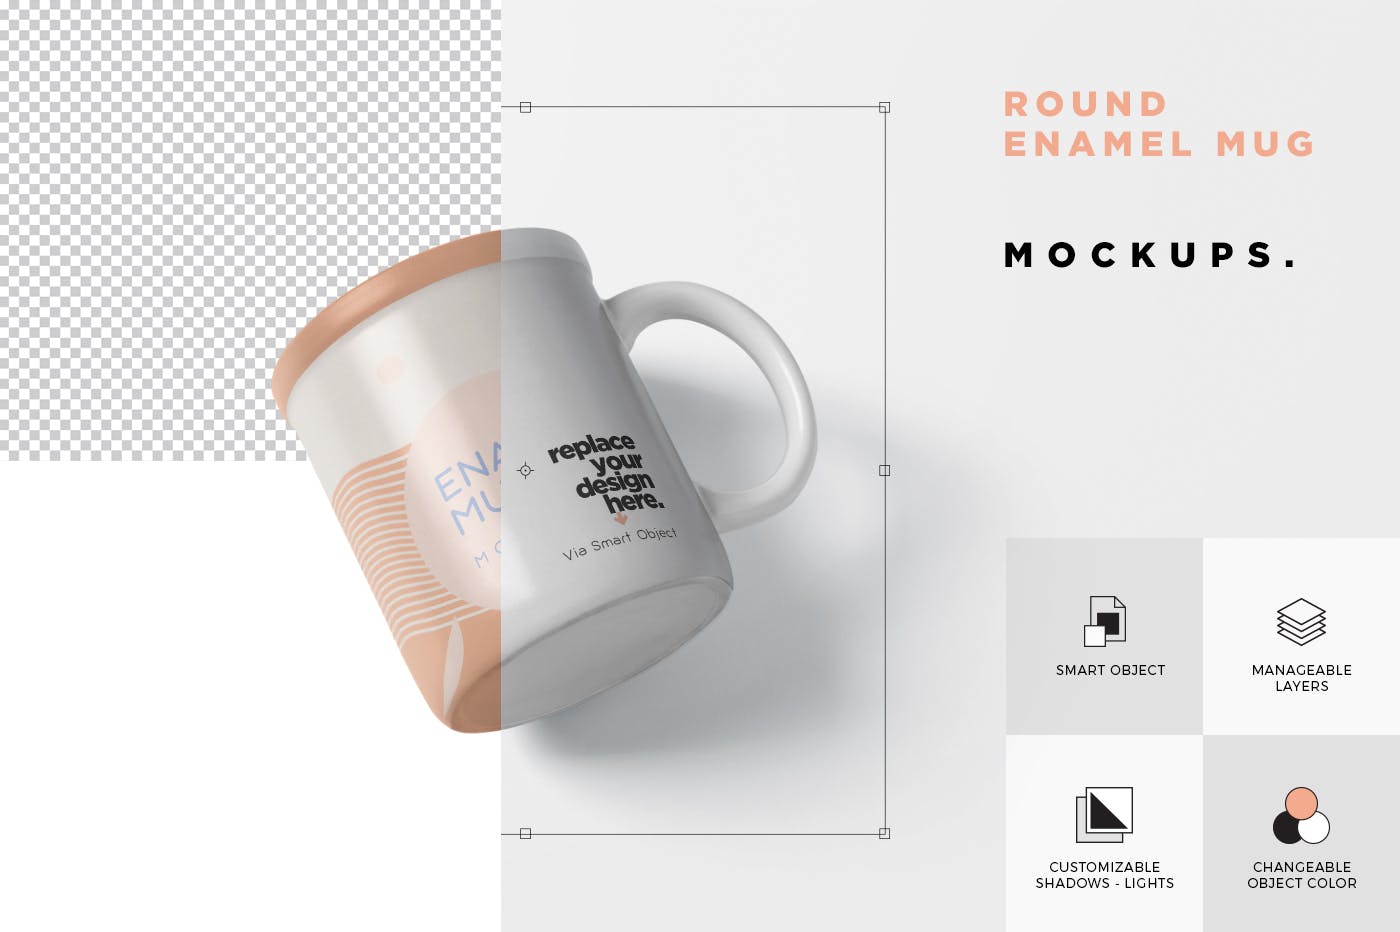 带把手圆形搪瓷杯马克杯图案设计普贤居精选 Round Enamel Mug Mockup With Handle插图(5)